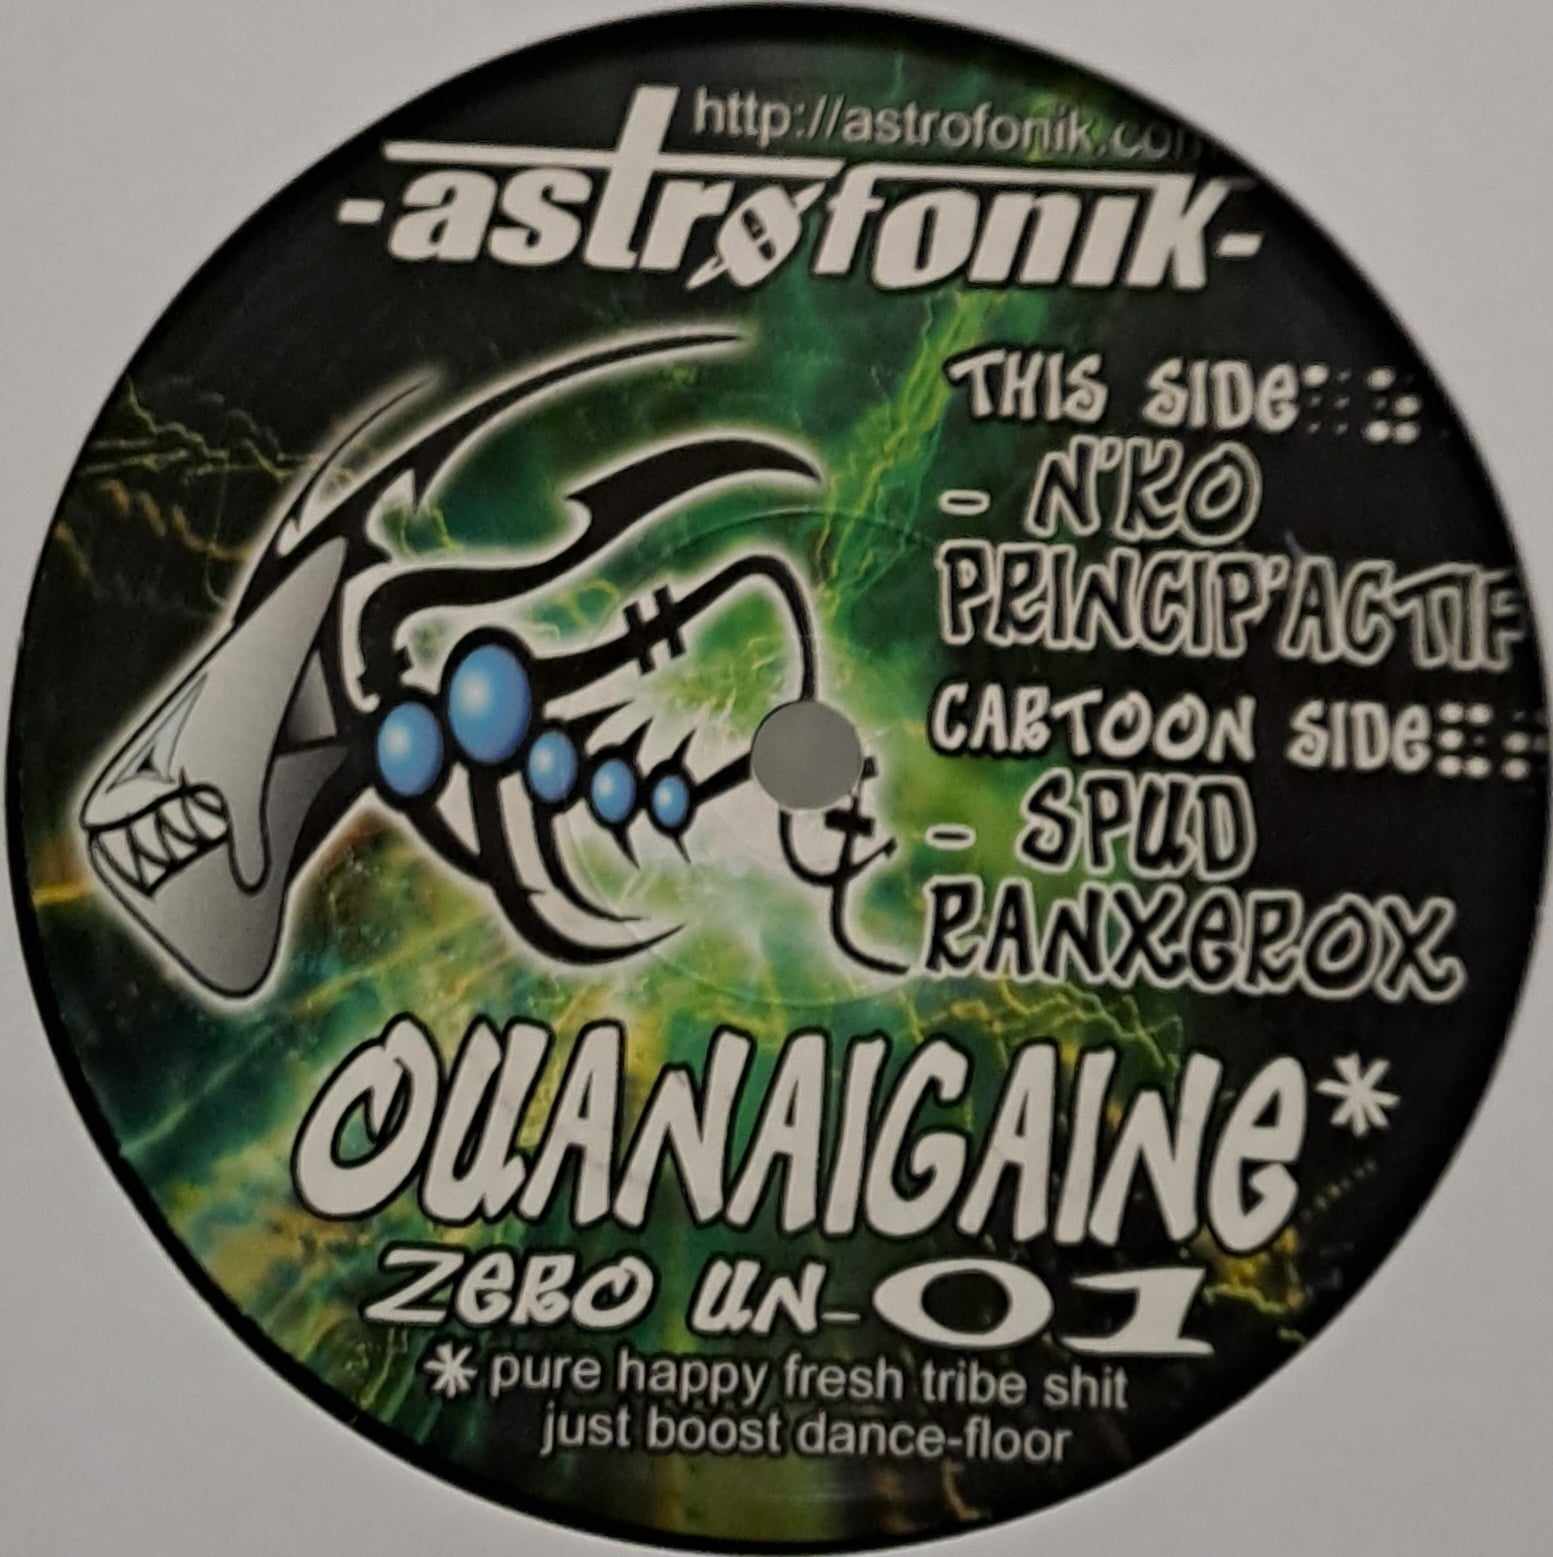 Ouanaigaine 01 - vinyle freetekno